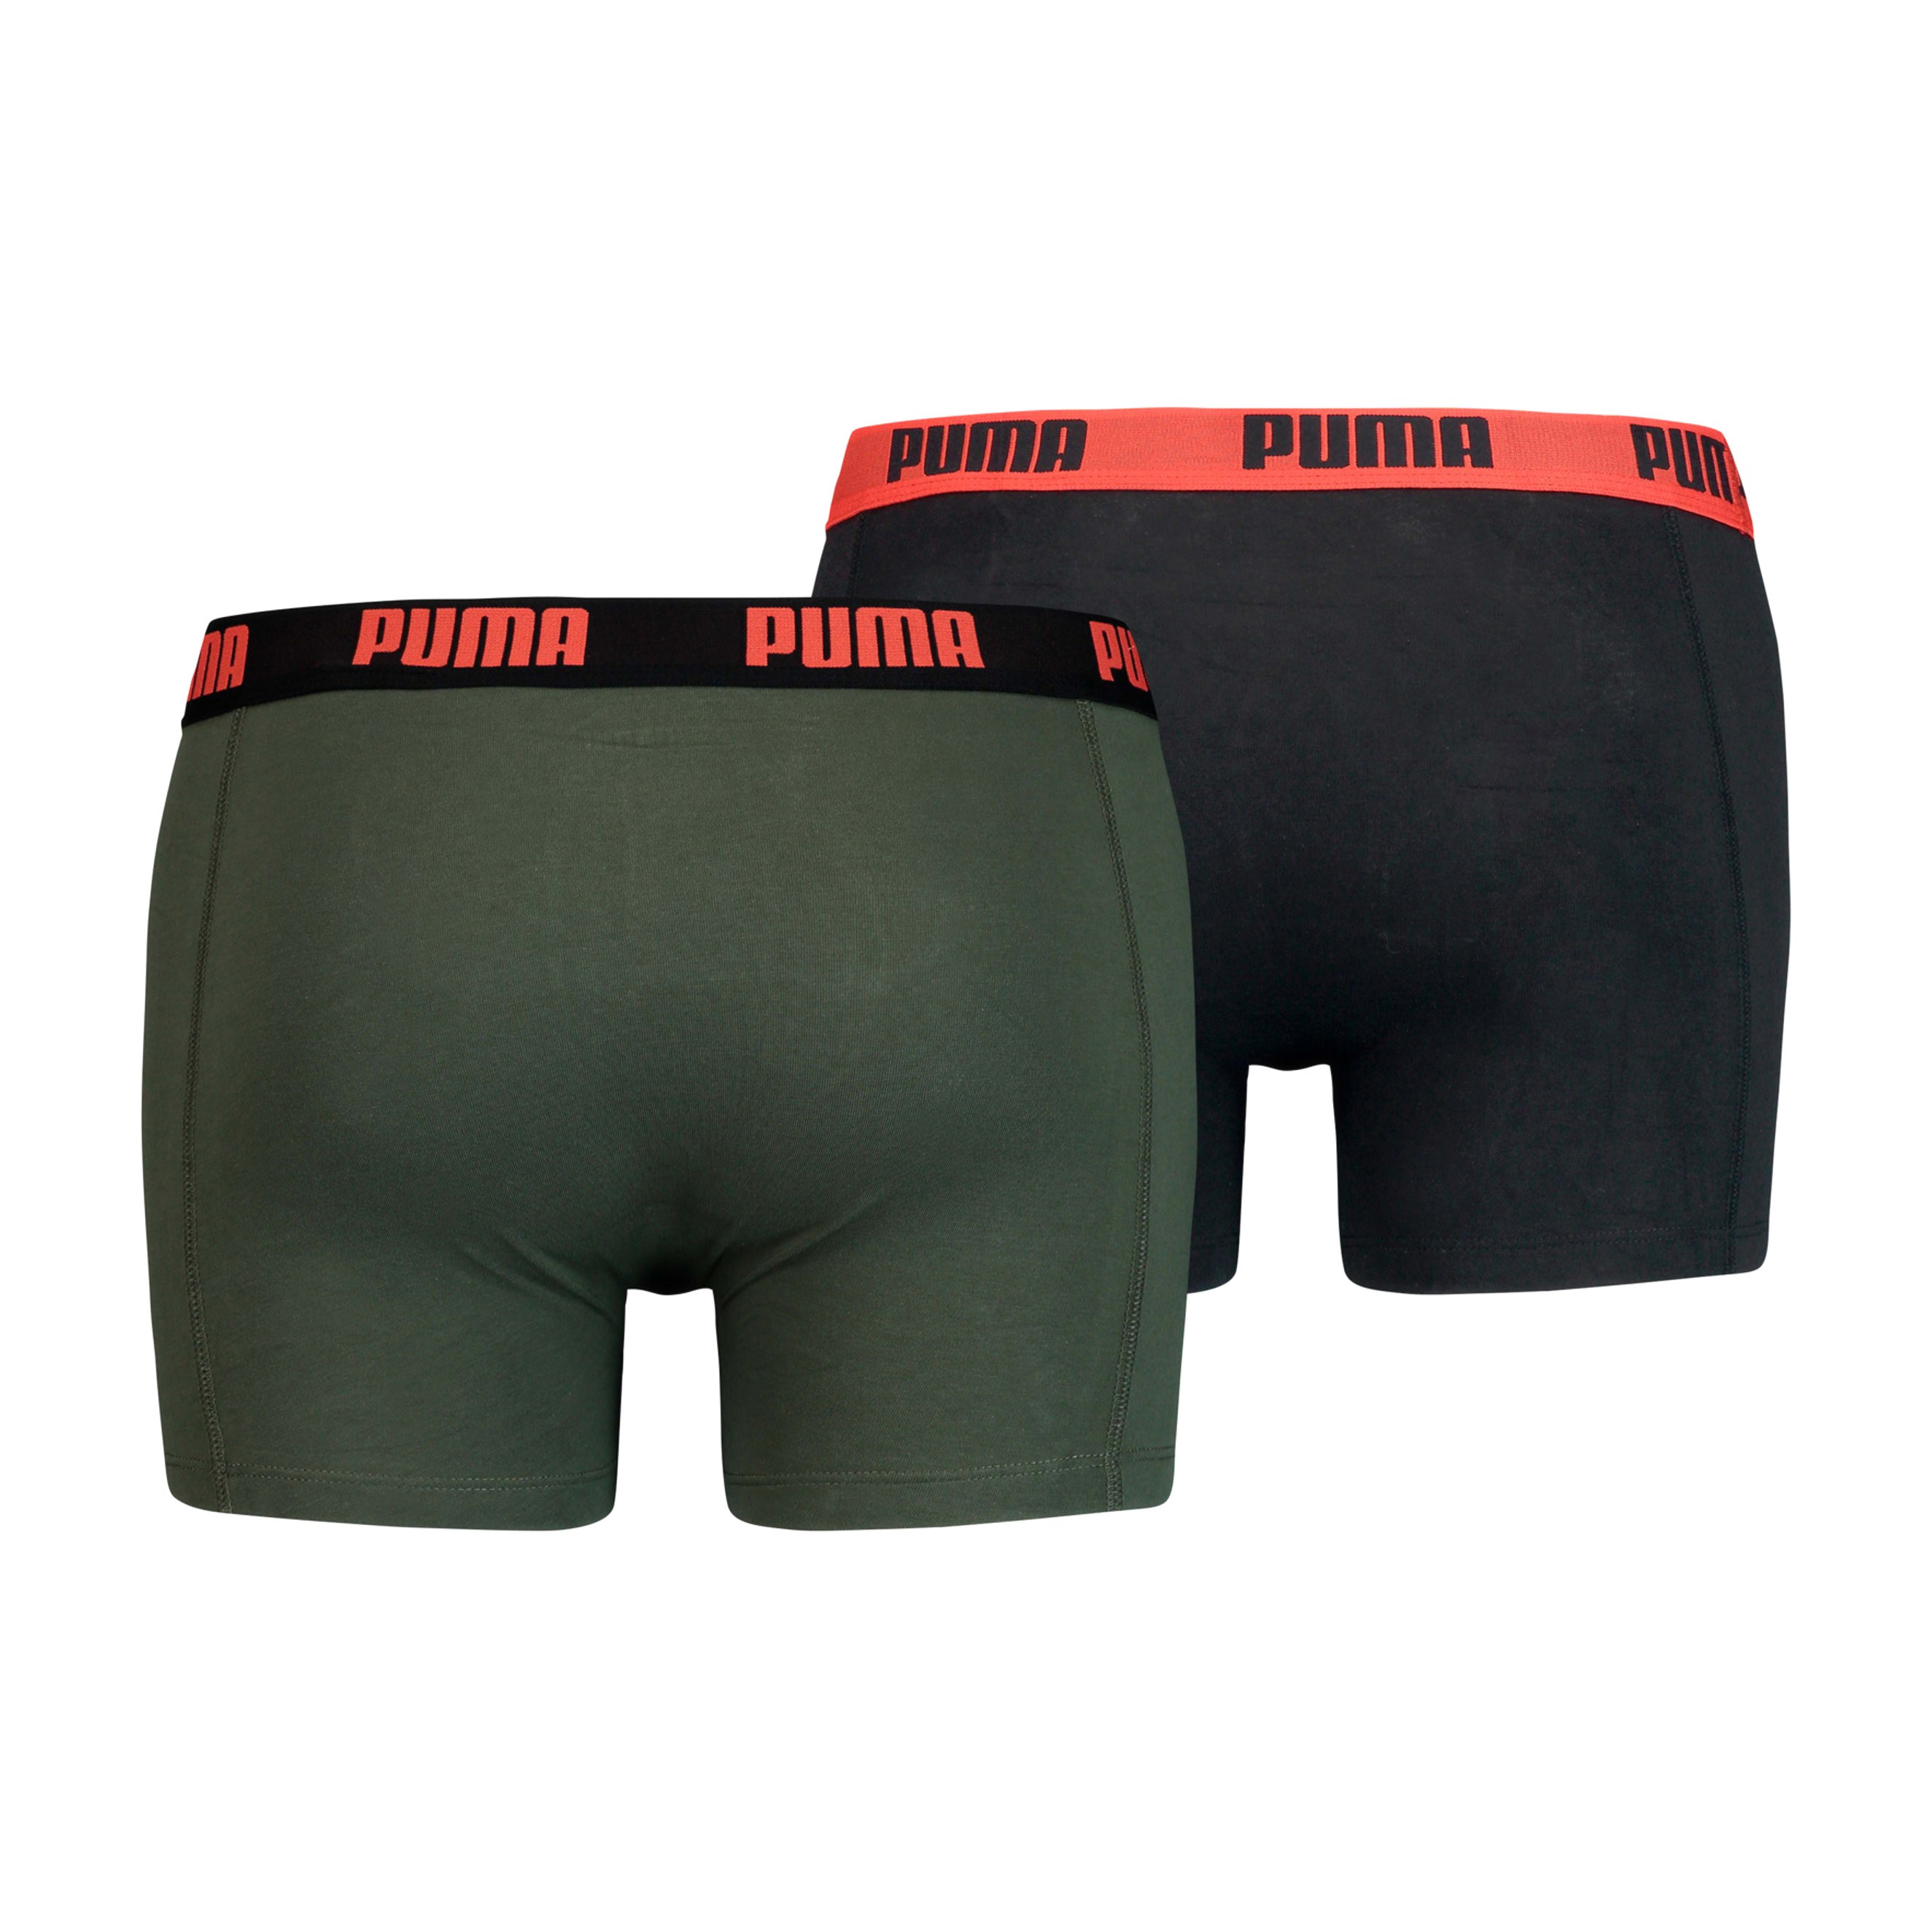 Basic Boxer Shorts 2 Pack - green: Packs for man brand Puma fo...